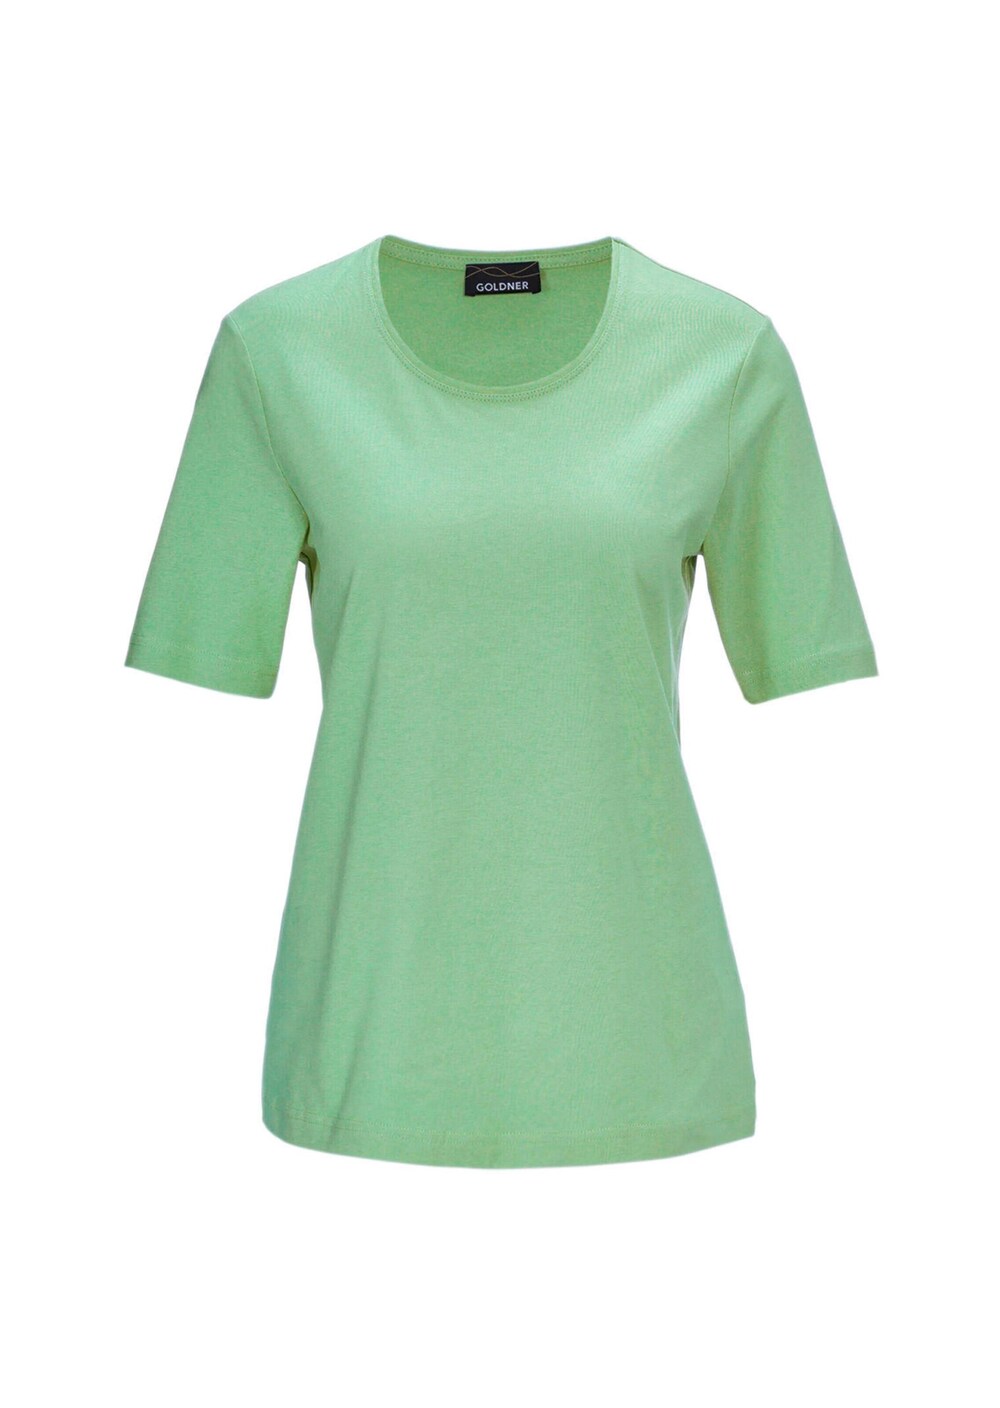 Рубашка Goldner, зеленый